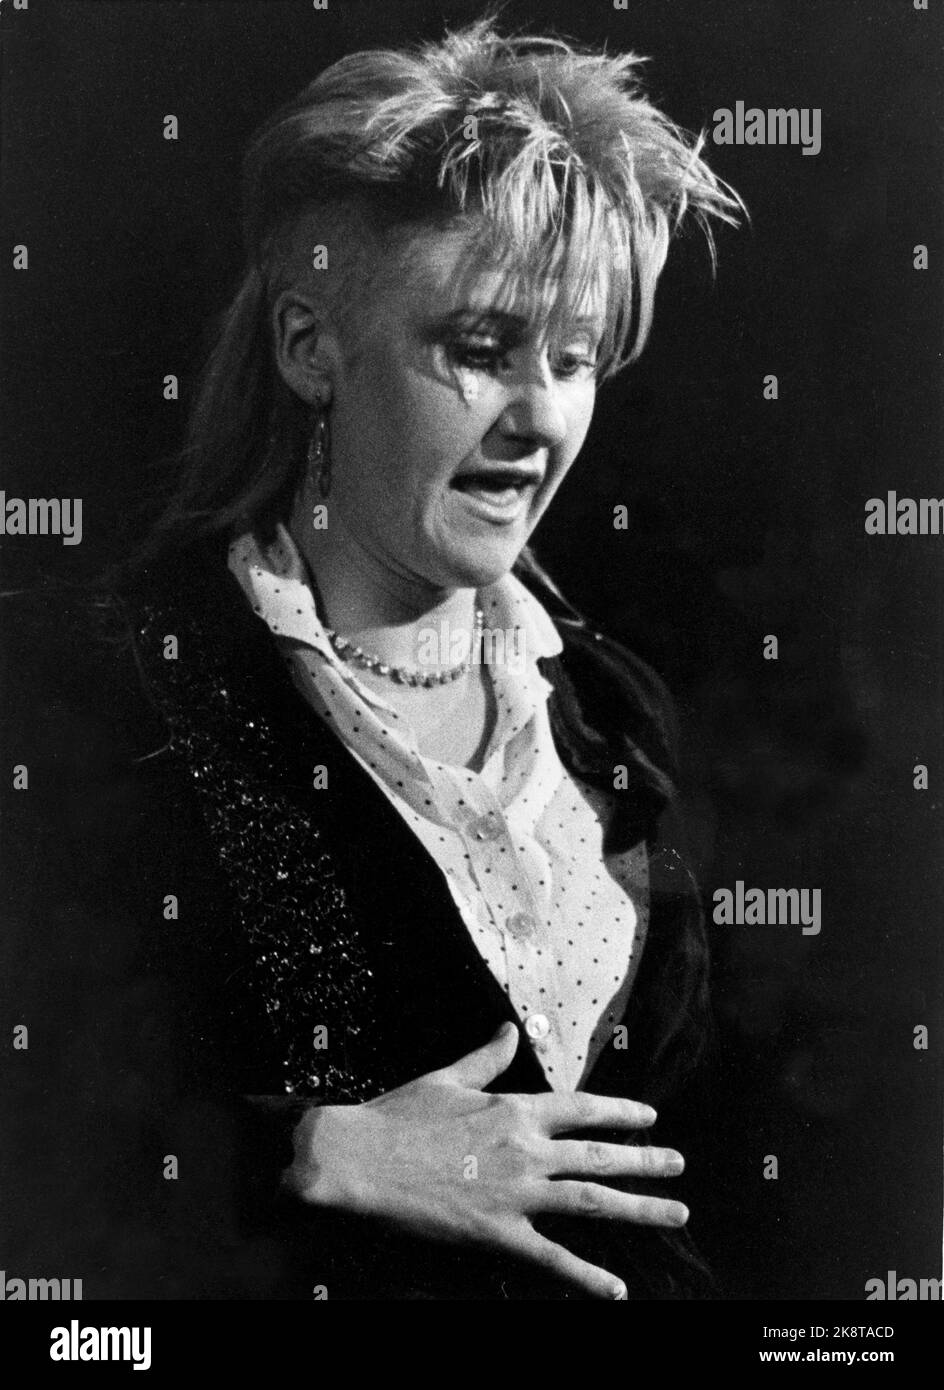 Oslo 19850105: Spellemann Prize 1984. Anne Grete Preus I Can Can Under the Spellemann Prize. Photo: Inge Gjellesvik NTB / NTB Stock Photo